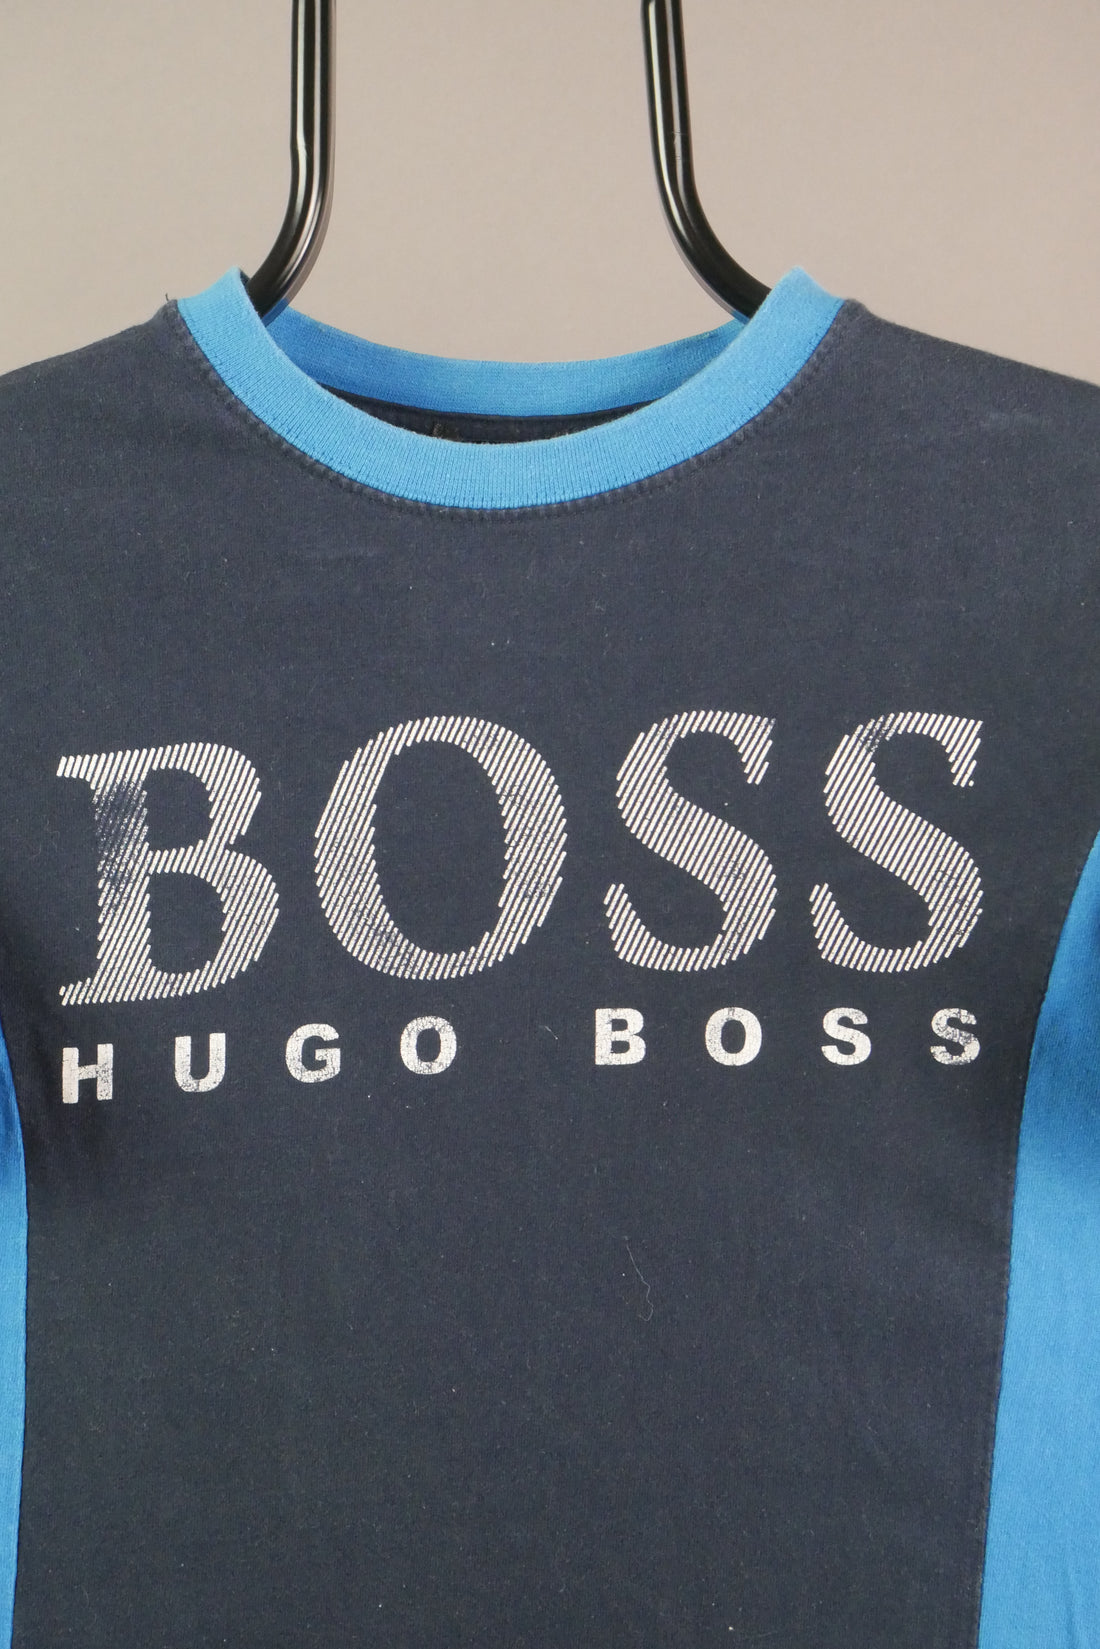 The Bootleg Hugo Boss T-Shirt (S)